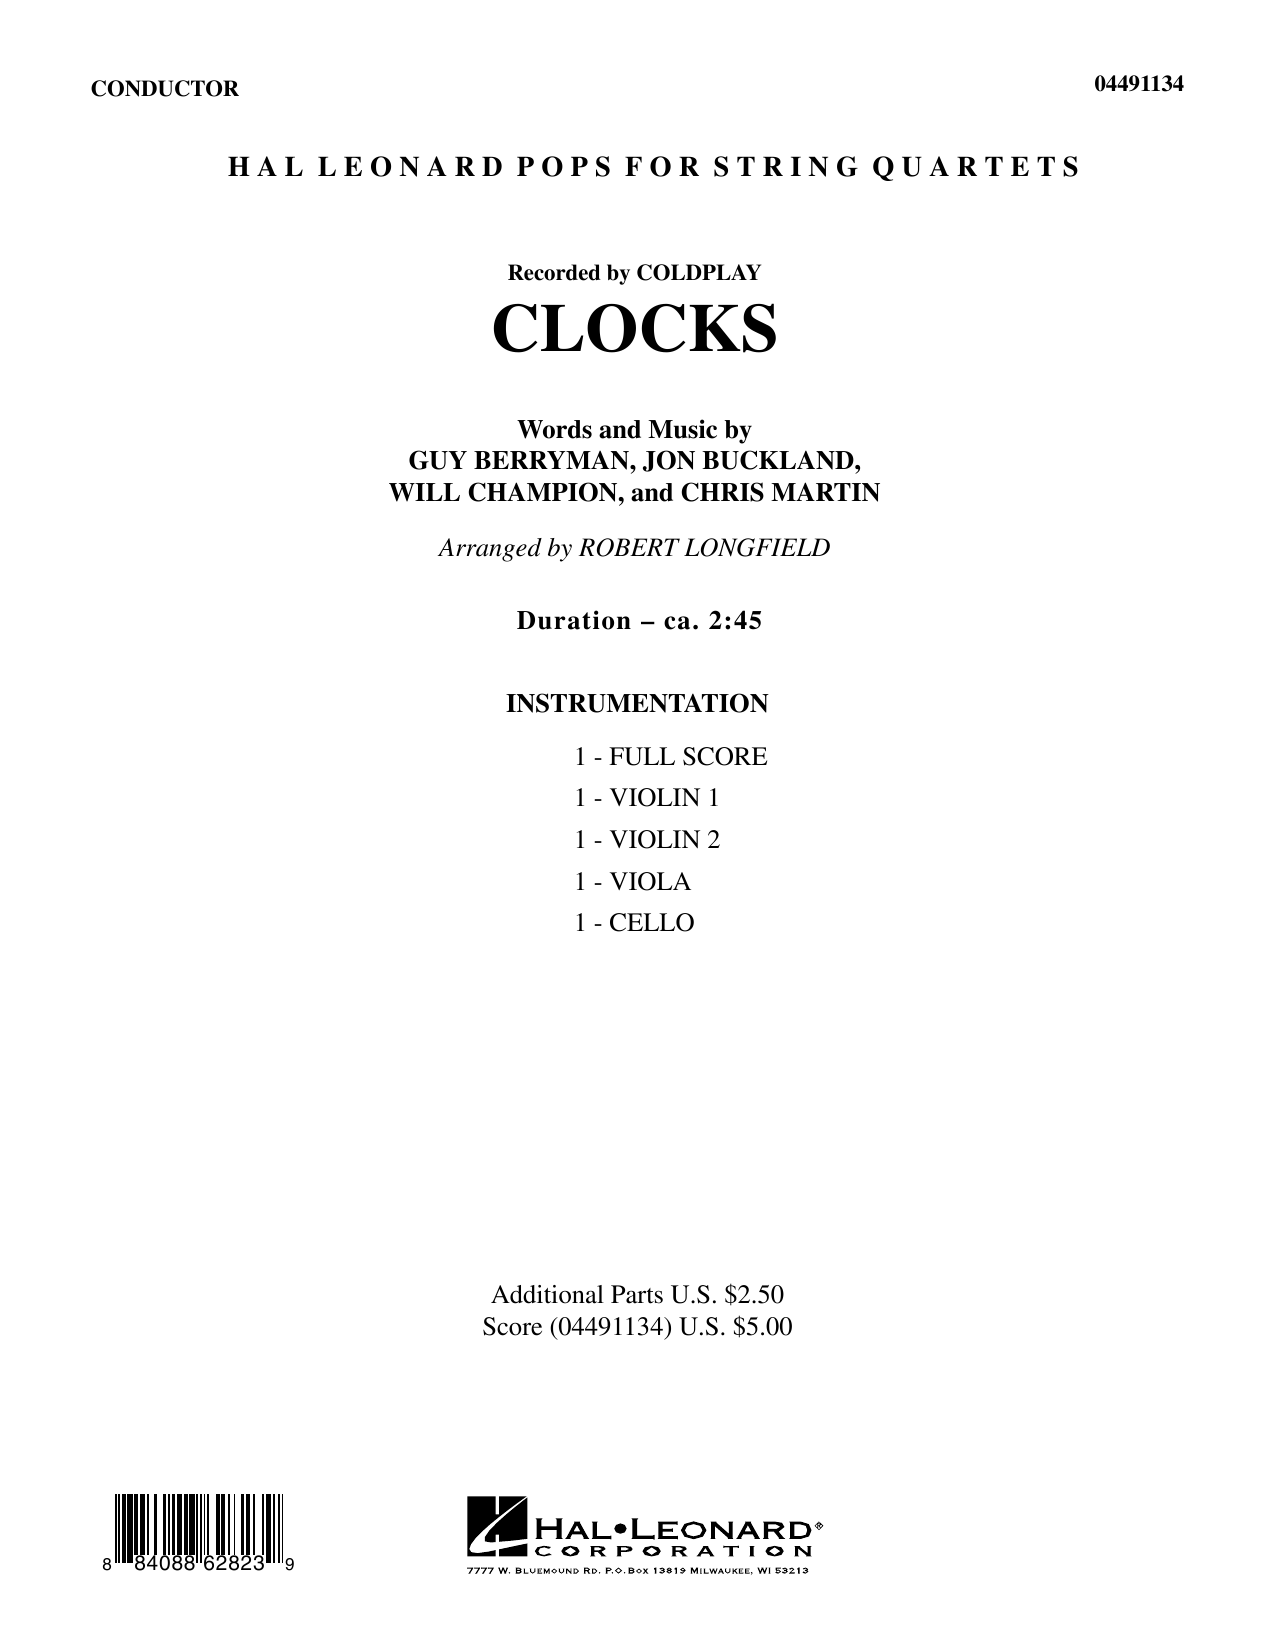 Robert Longfield Clocks - Full Score sheet music notes and chords arranged for String Quartet